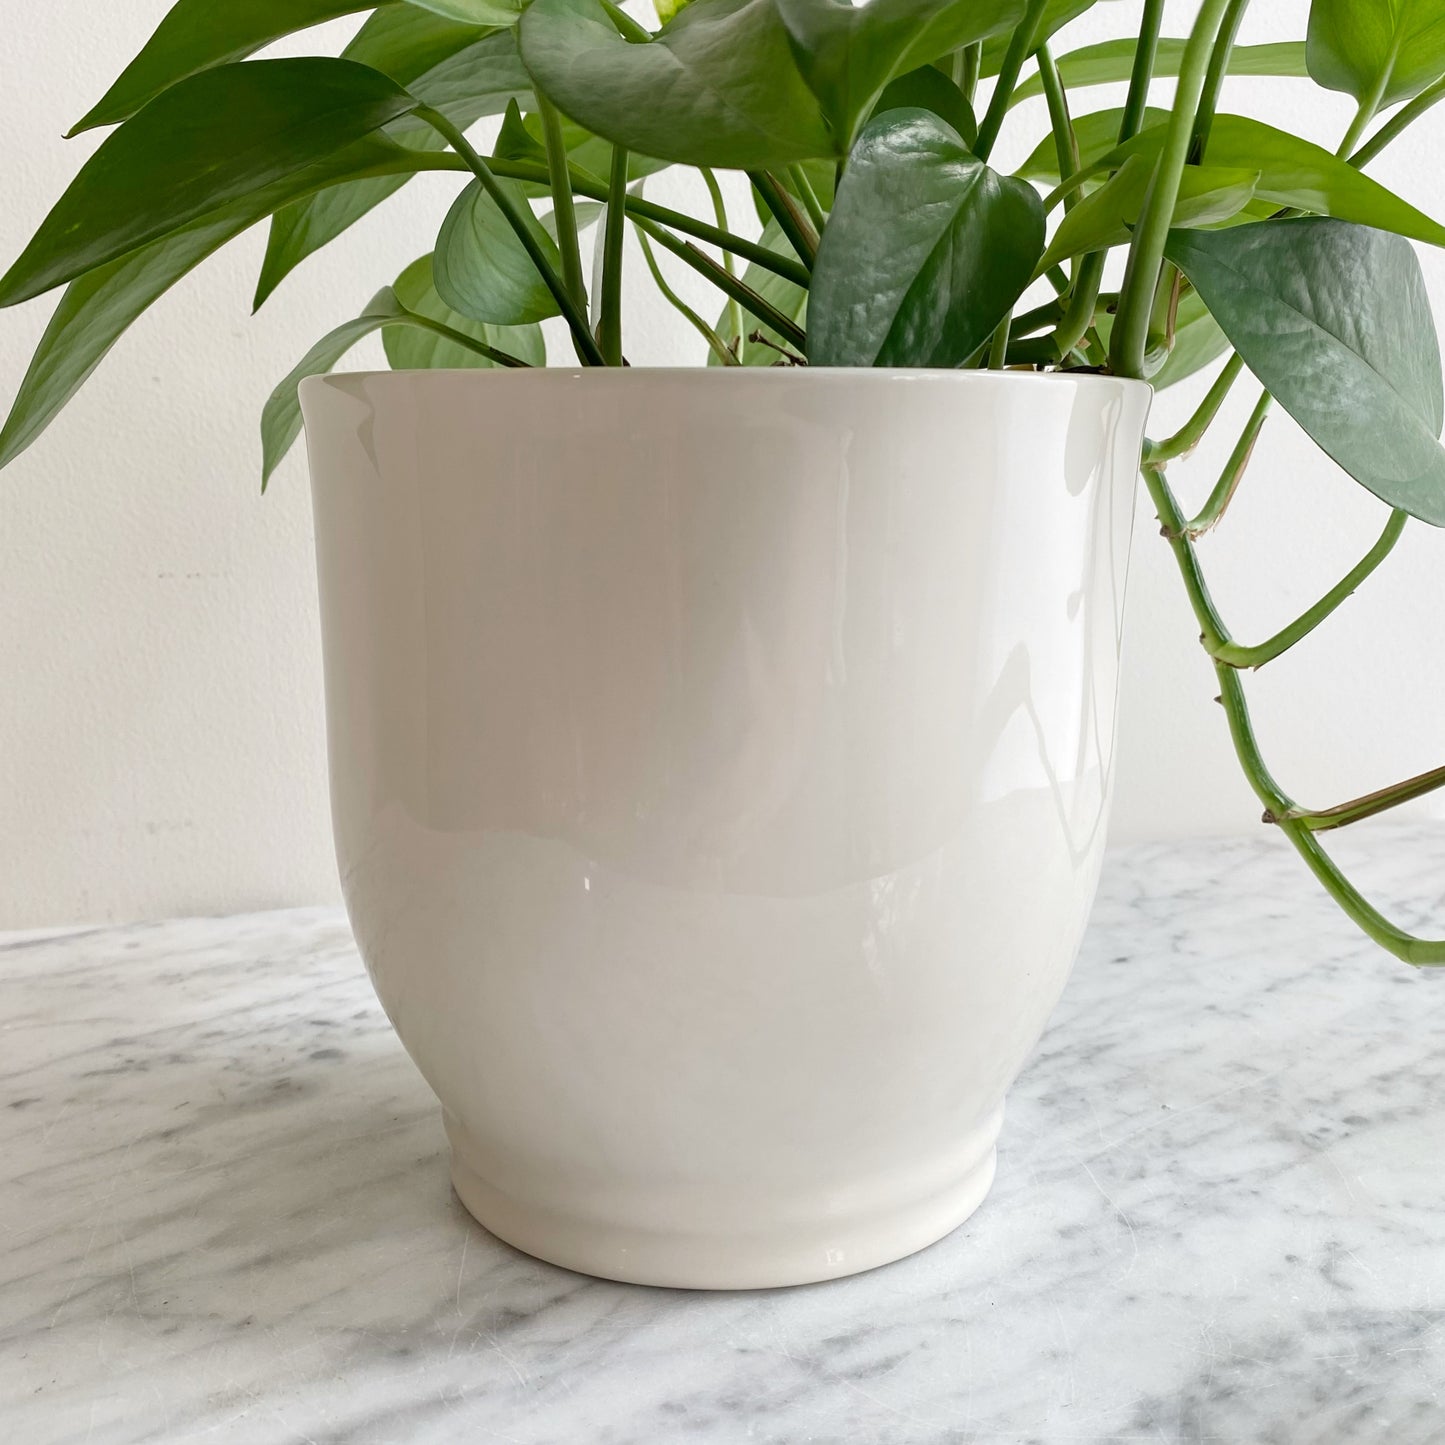 Found Elegant White Ceramic Planter